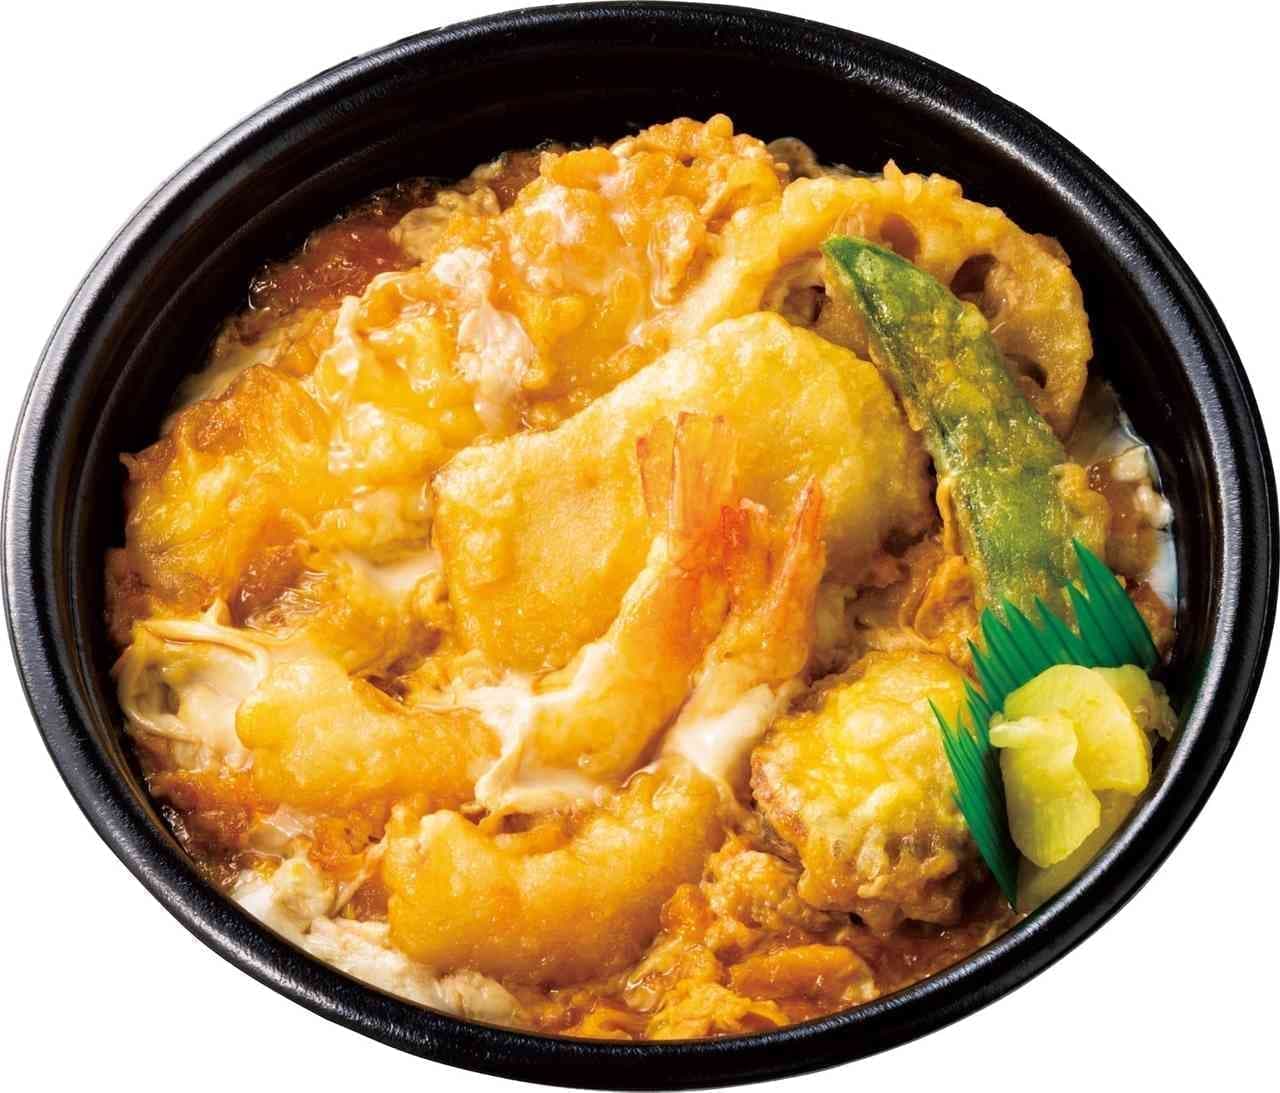 Hotto Motto "Kaisen Ten-Tsuji Donburi" (Bowl of rice topped with seafood and tempura)